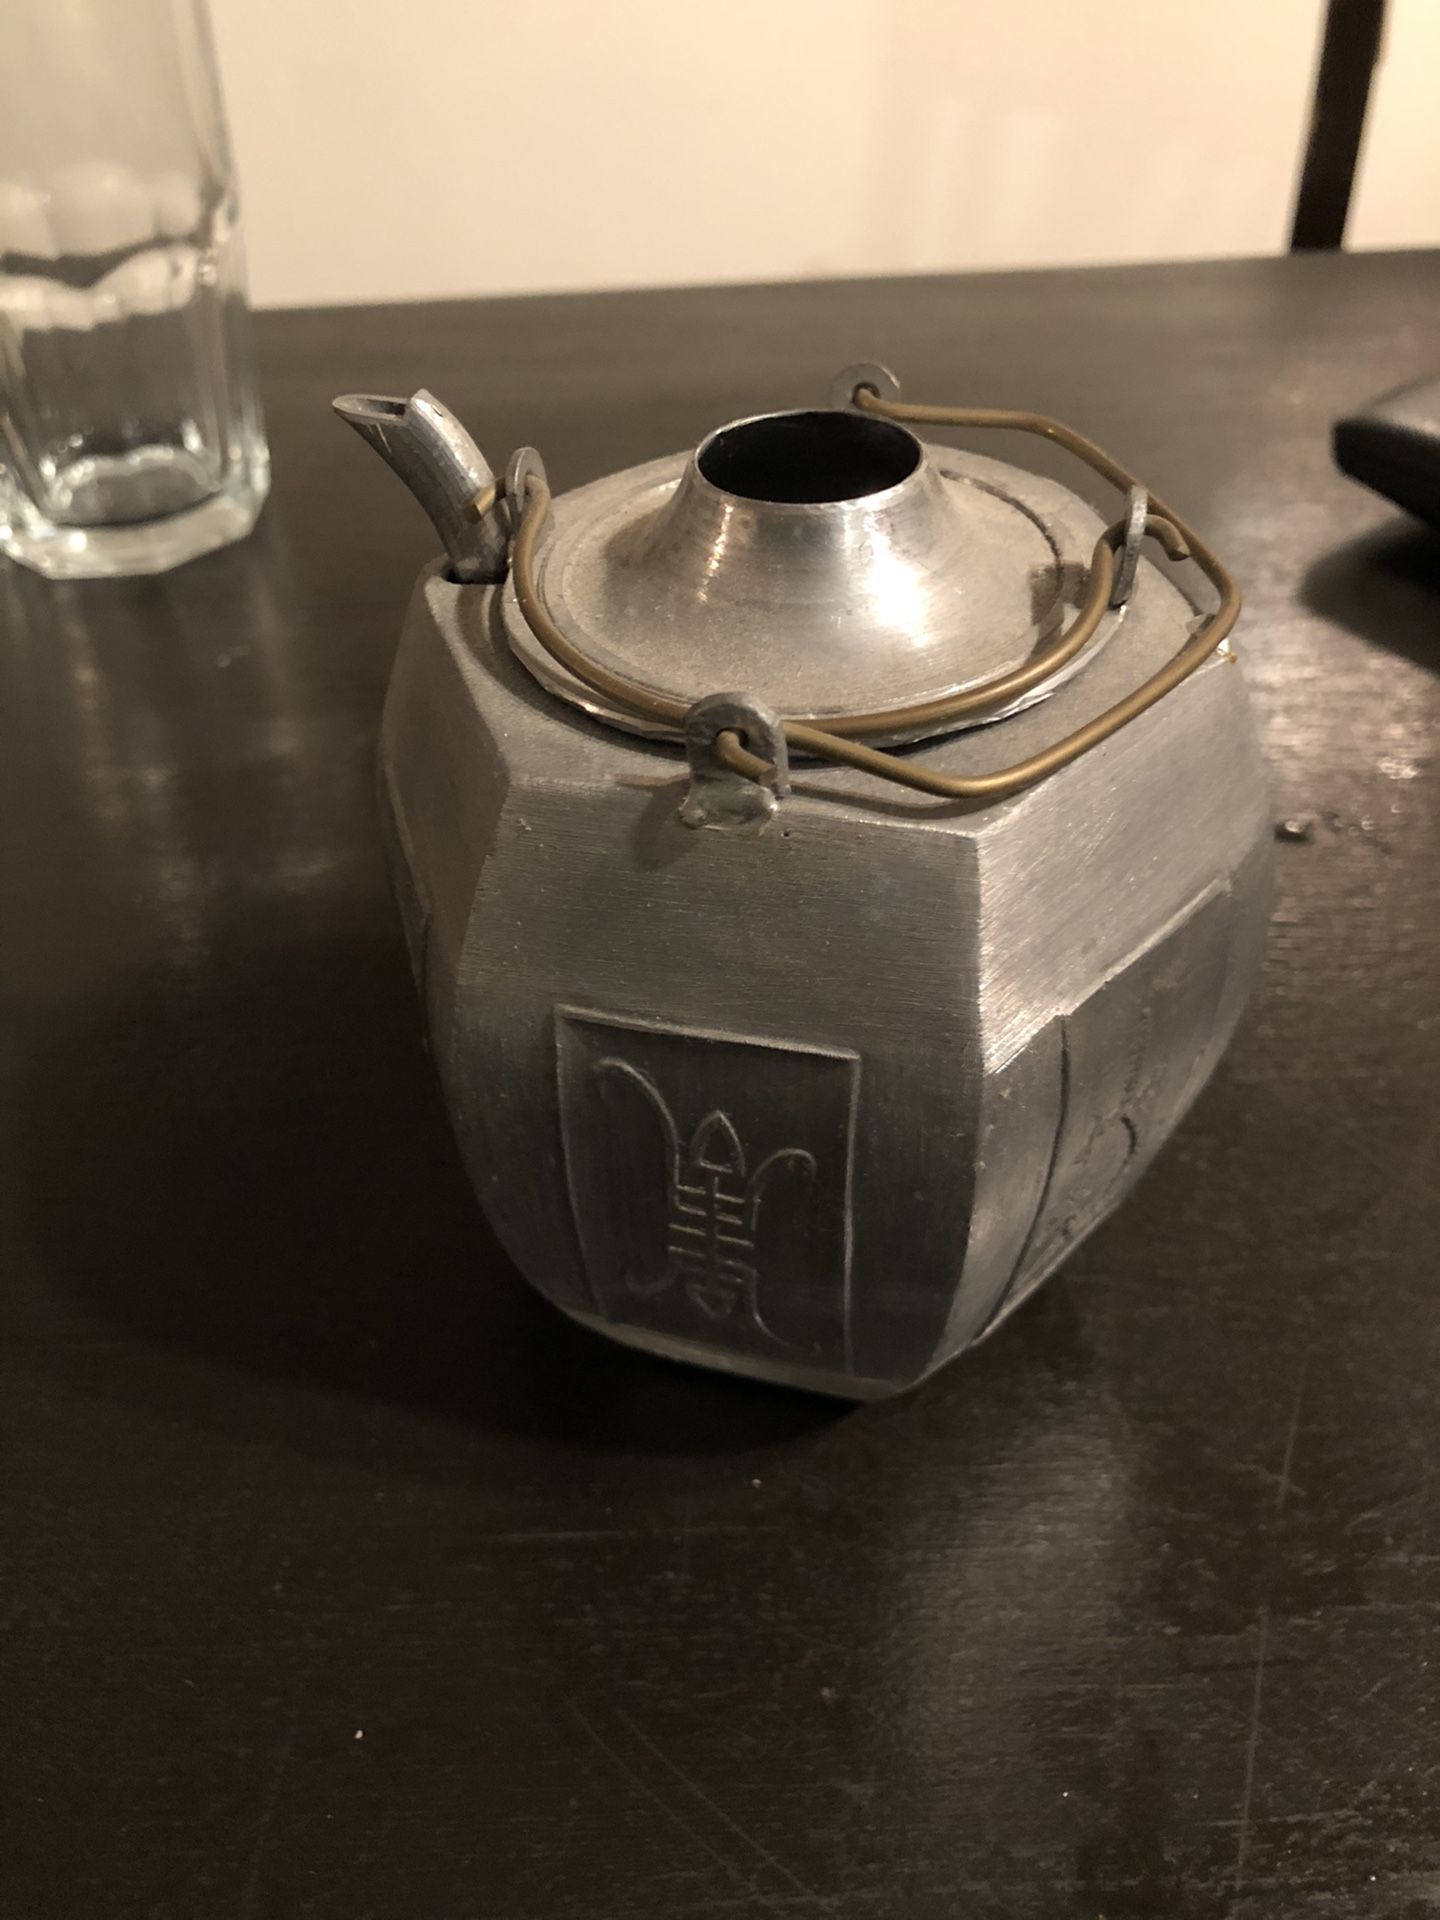 Small Adorable oriental decorative tea pot